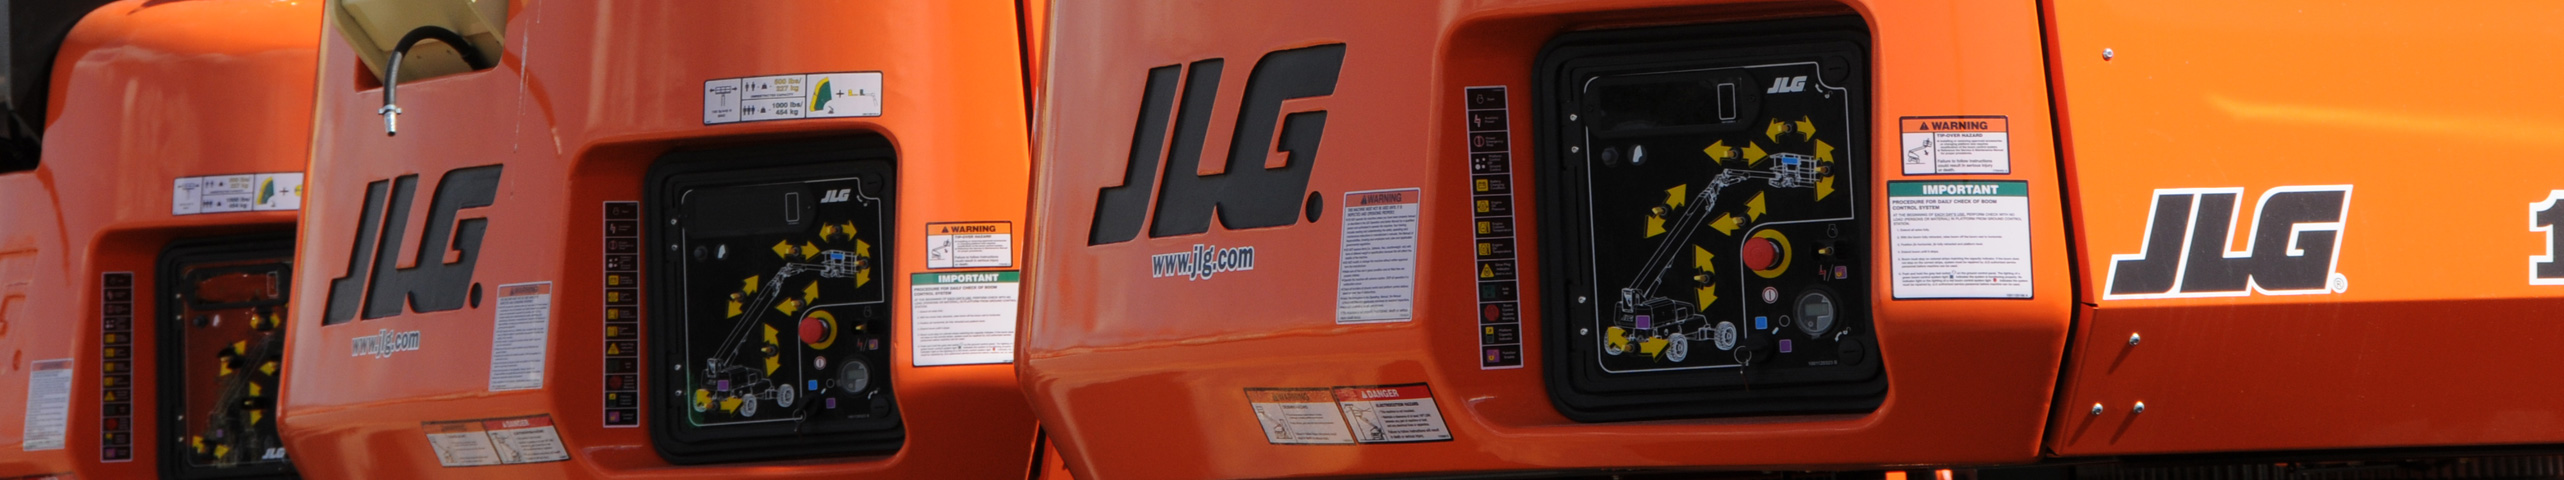 JLG Certifications and Memberships header